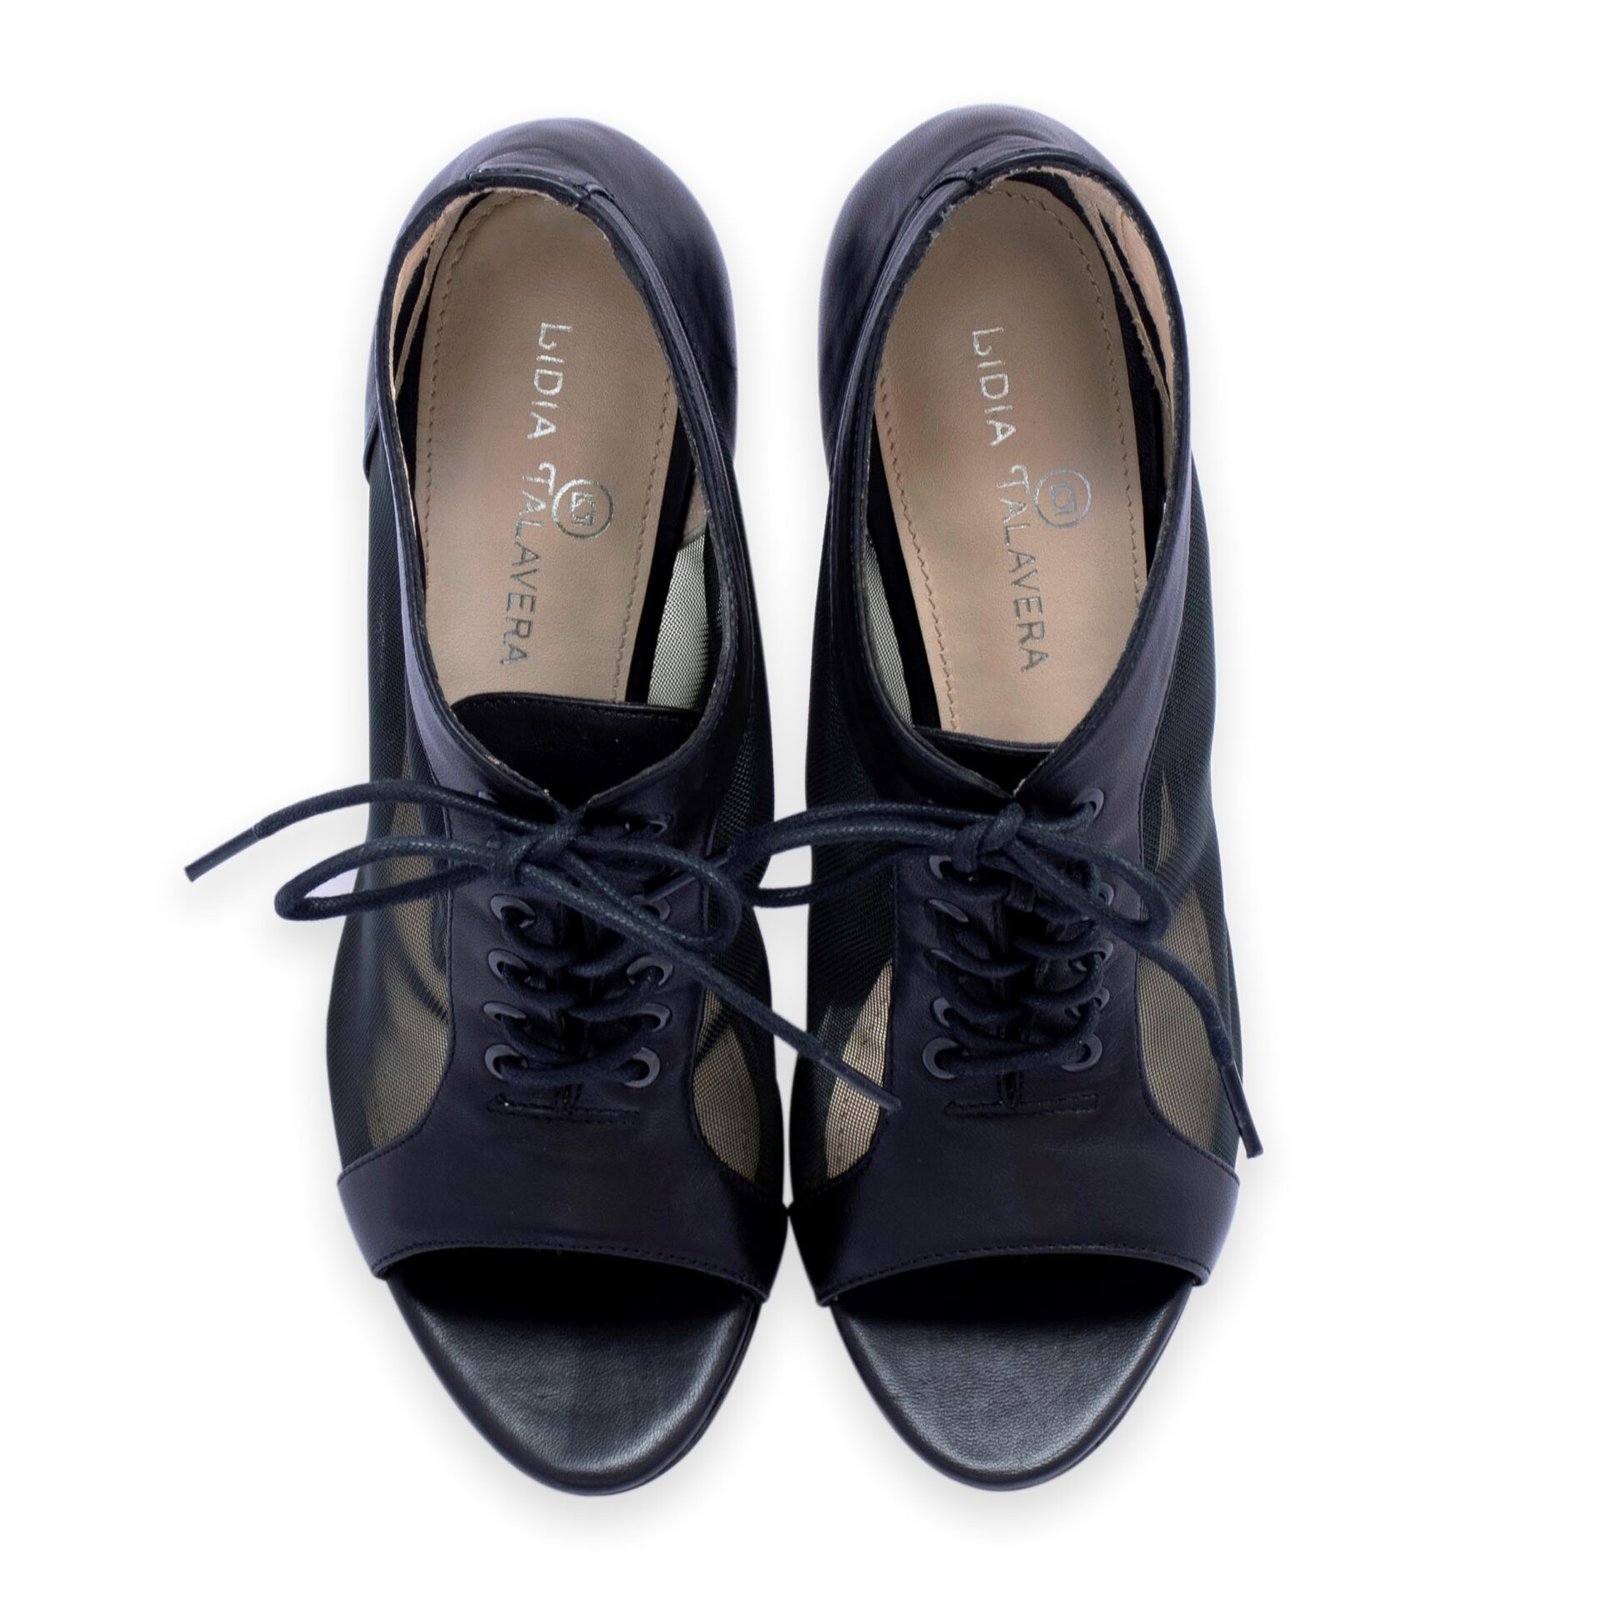 black front lace ankle bootie heels for men & women